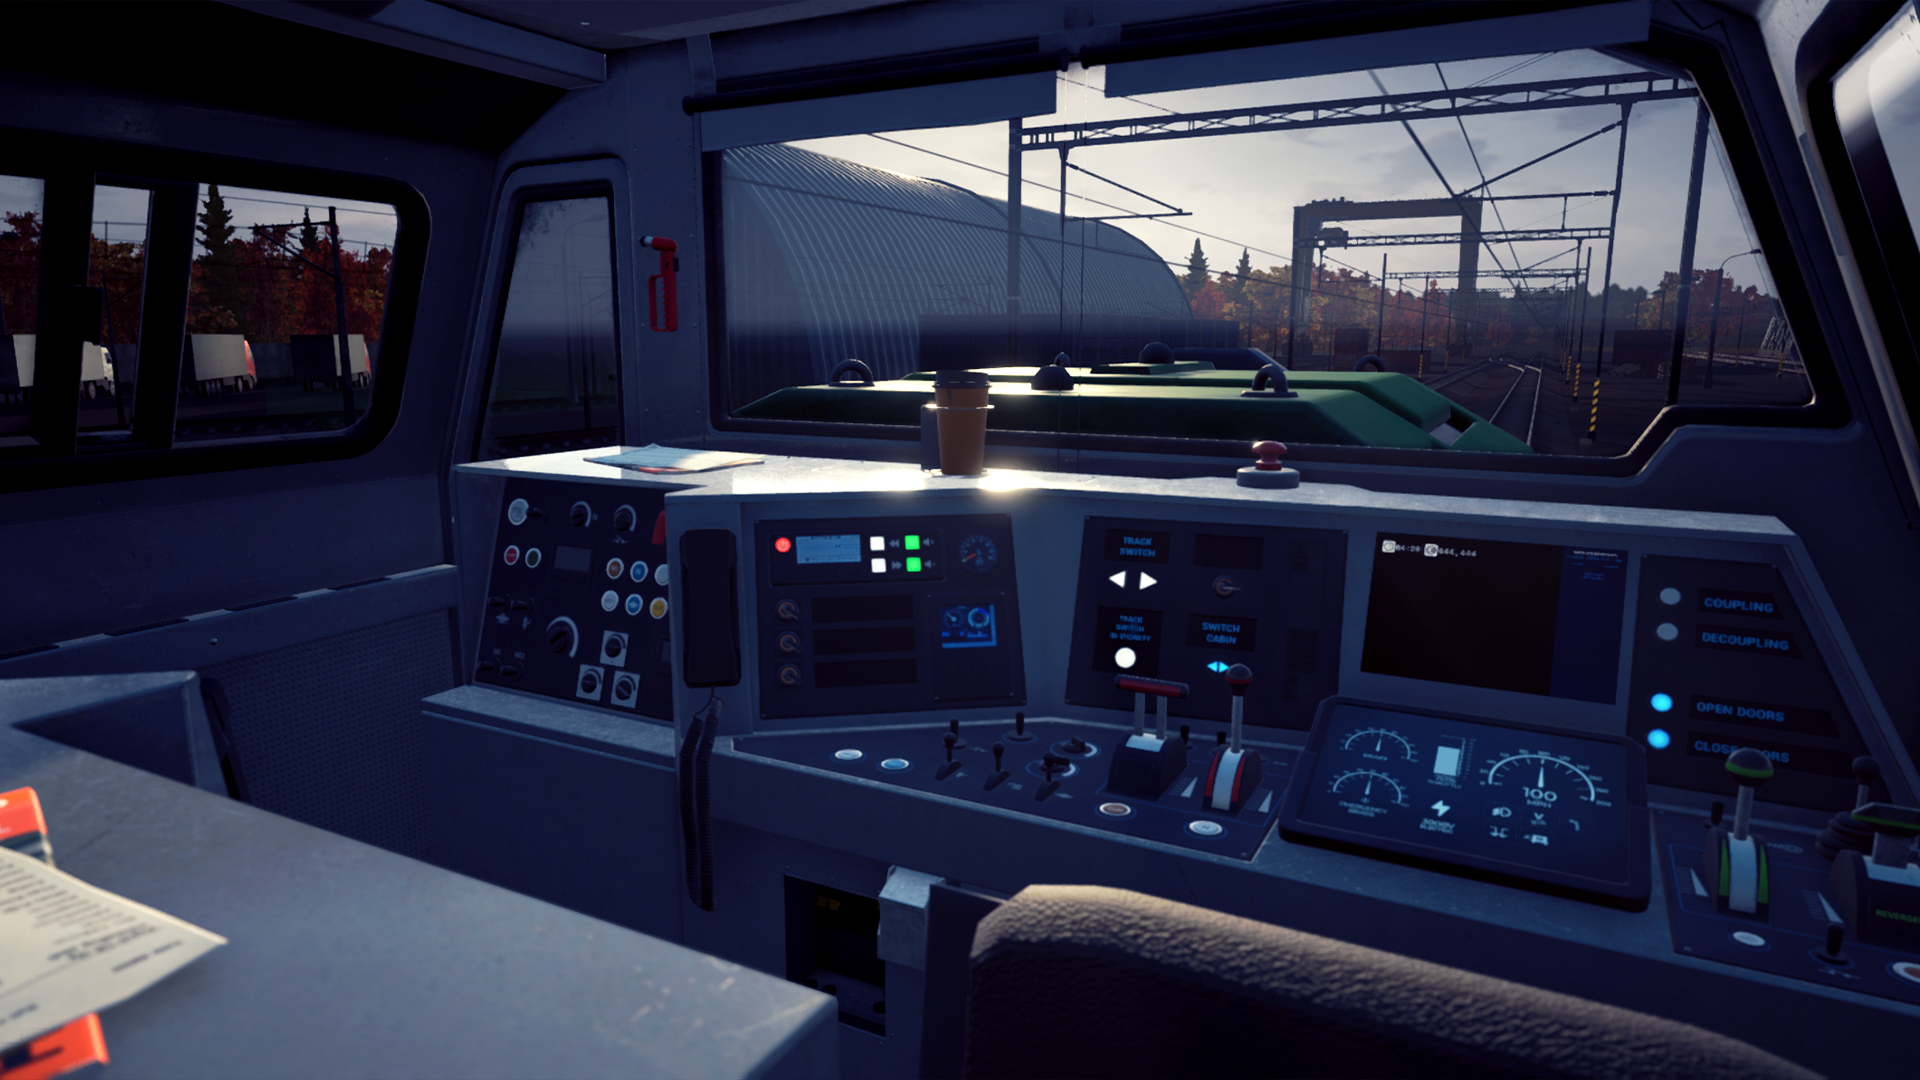 Train Life: A Railway Simulator - Launch | ROW 1 (4bcbf8d3-1128-4fa8-82ba-a0656dc06865)